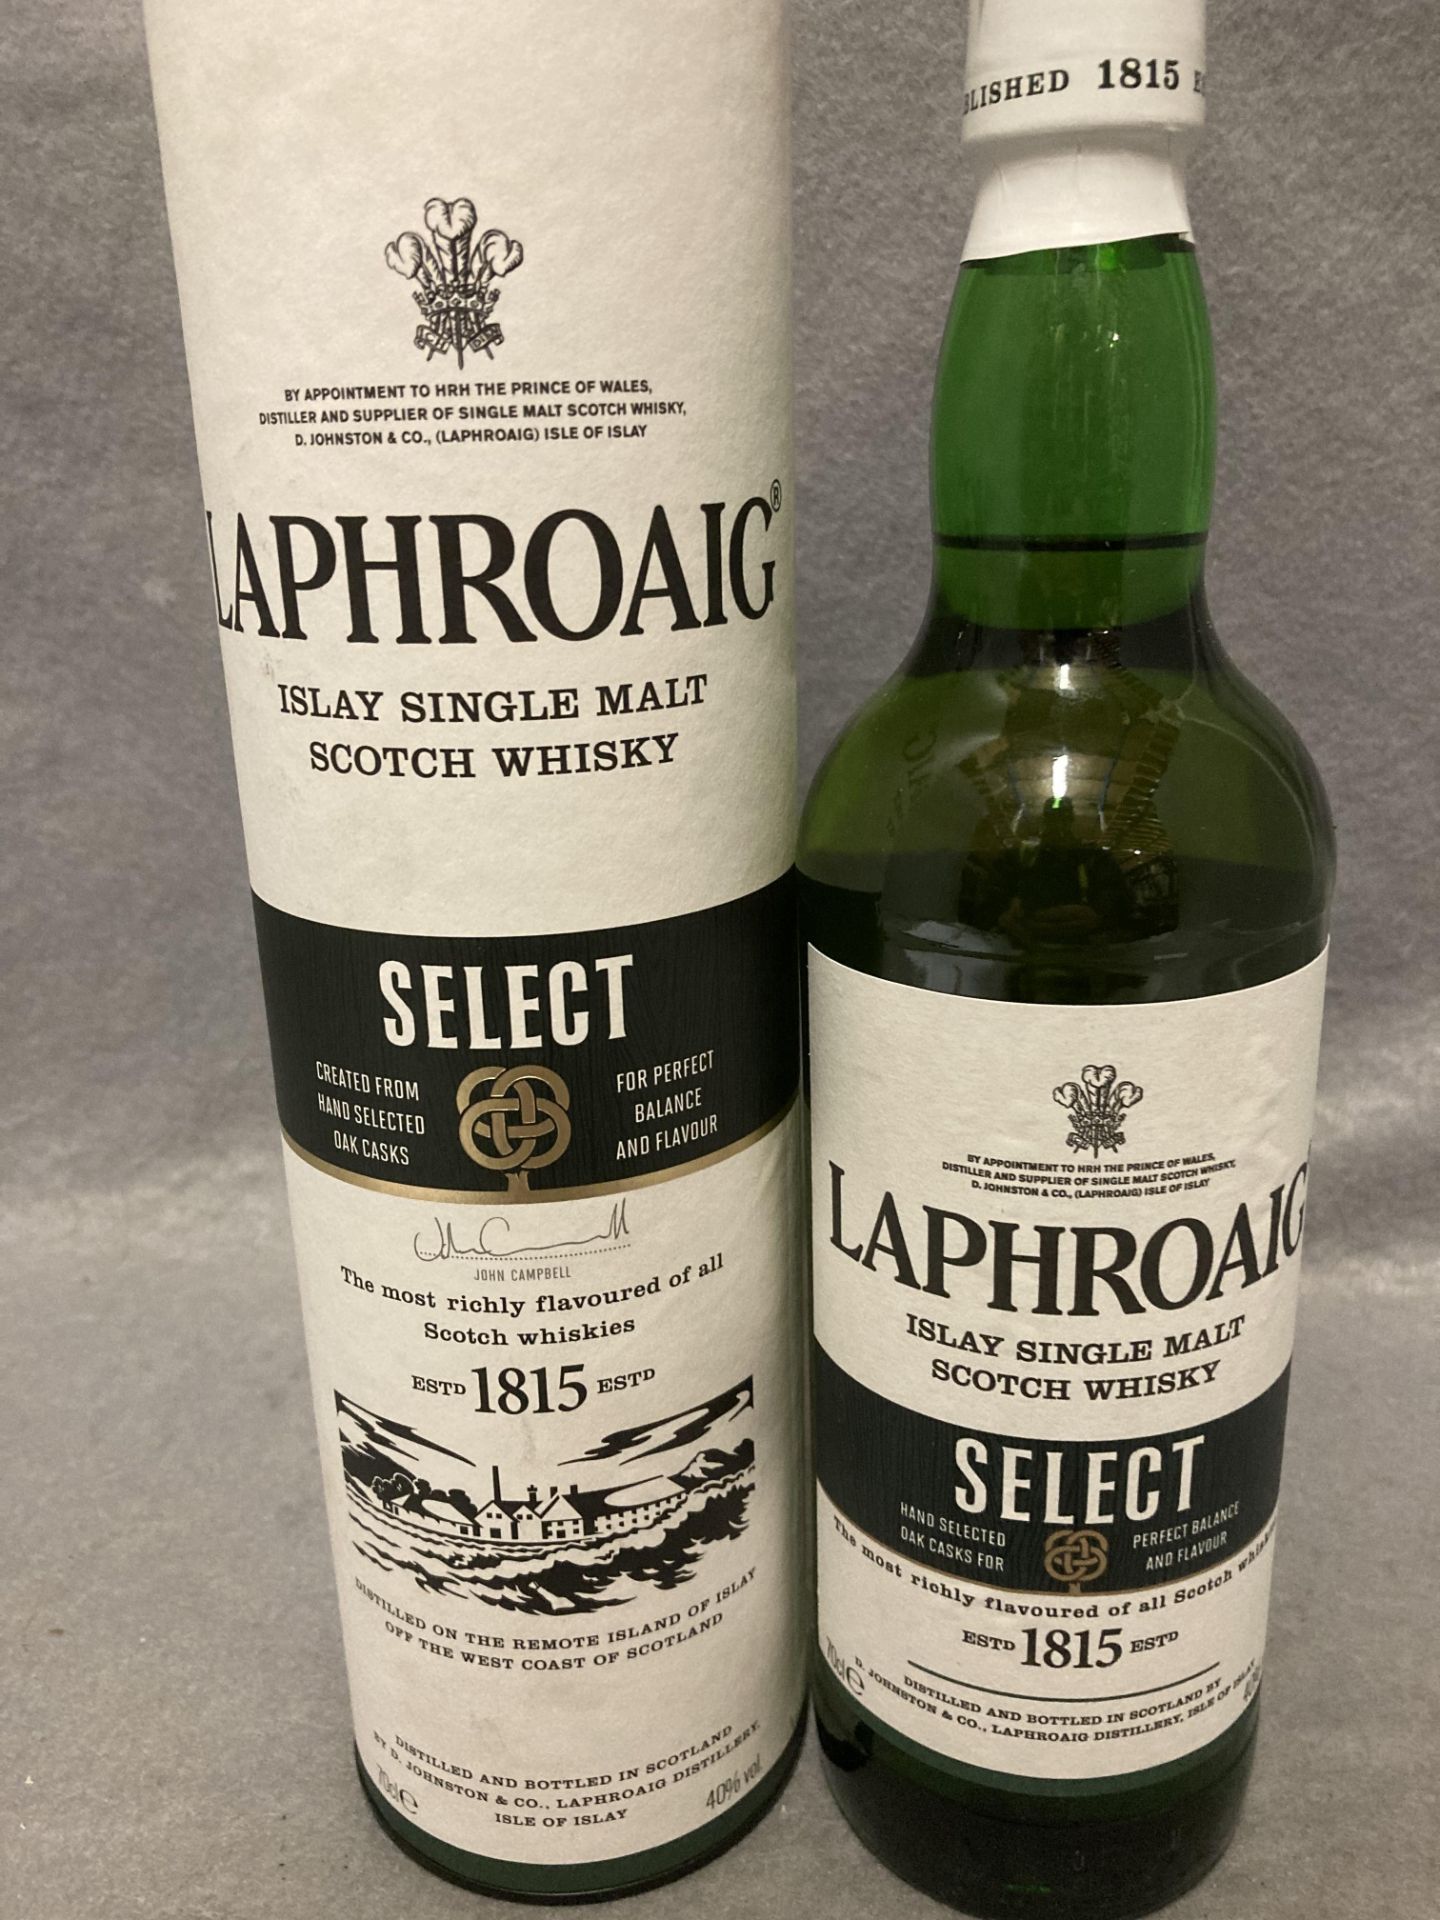 A 70cl bottle of Laphroaig Islay Single Malt Scotch Whisky (40% volume) in presentation tube